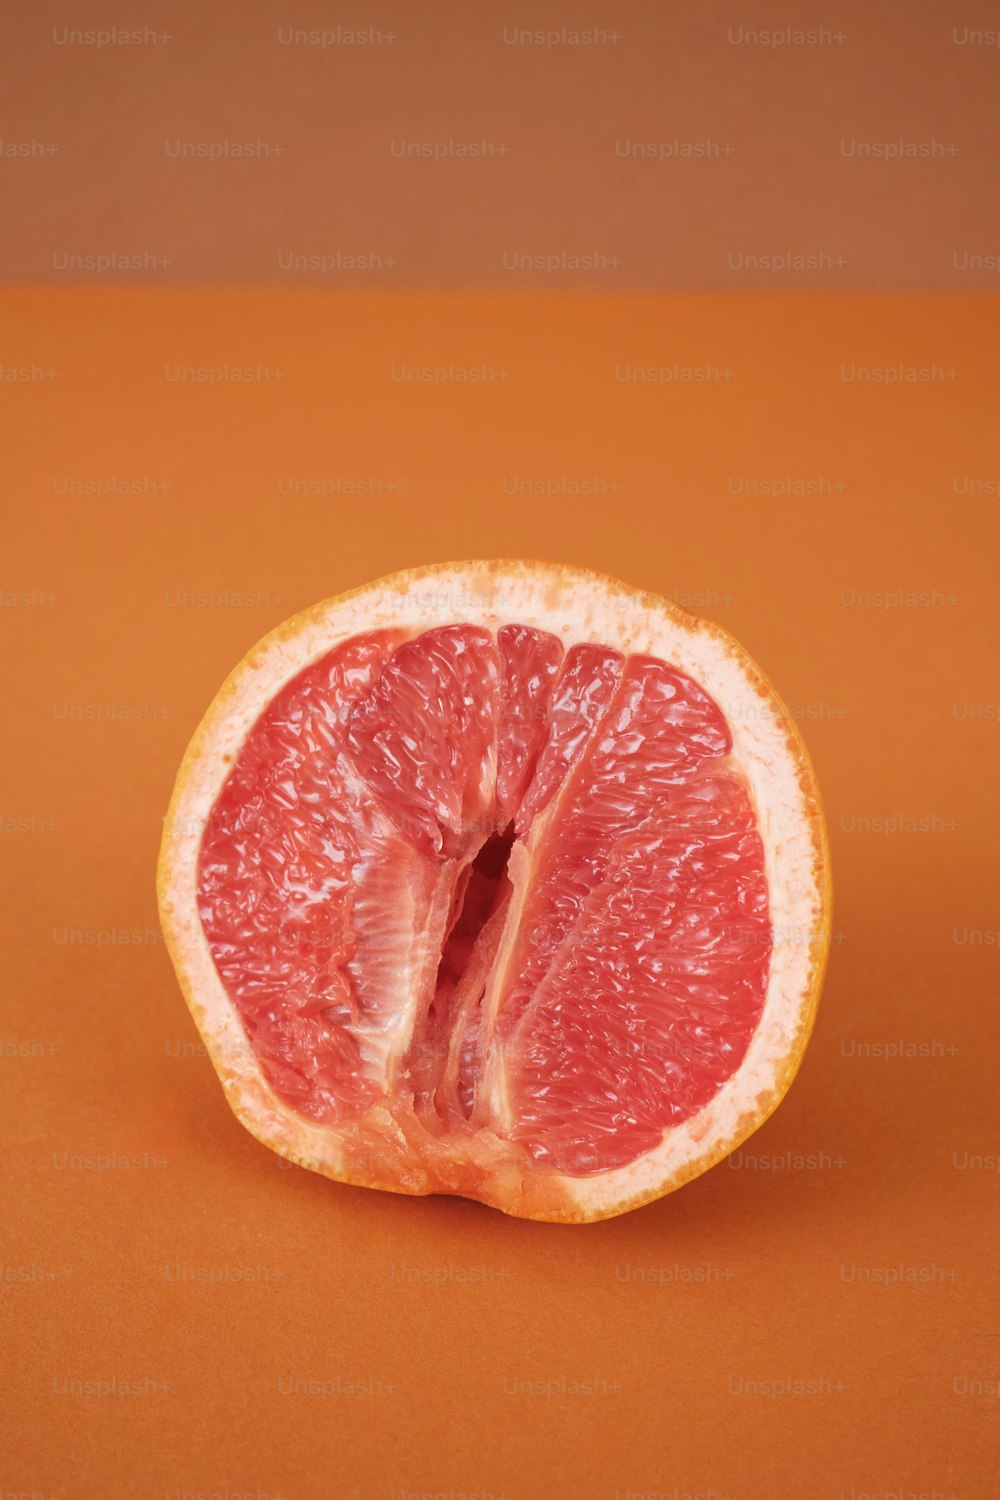 a grapefruit cut in half on an orange background